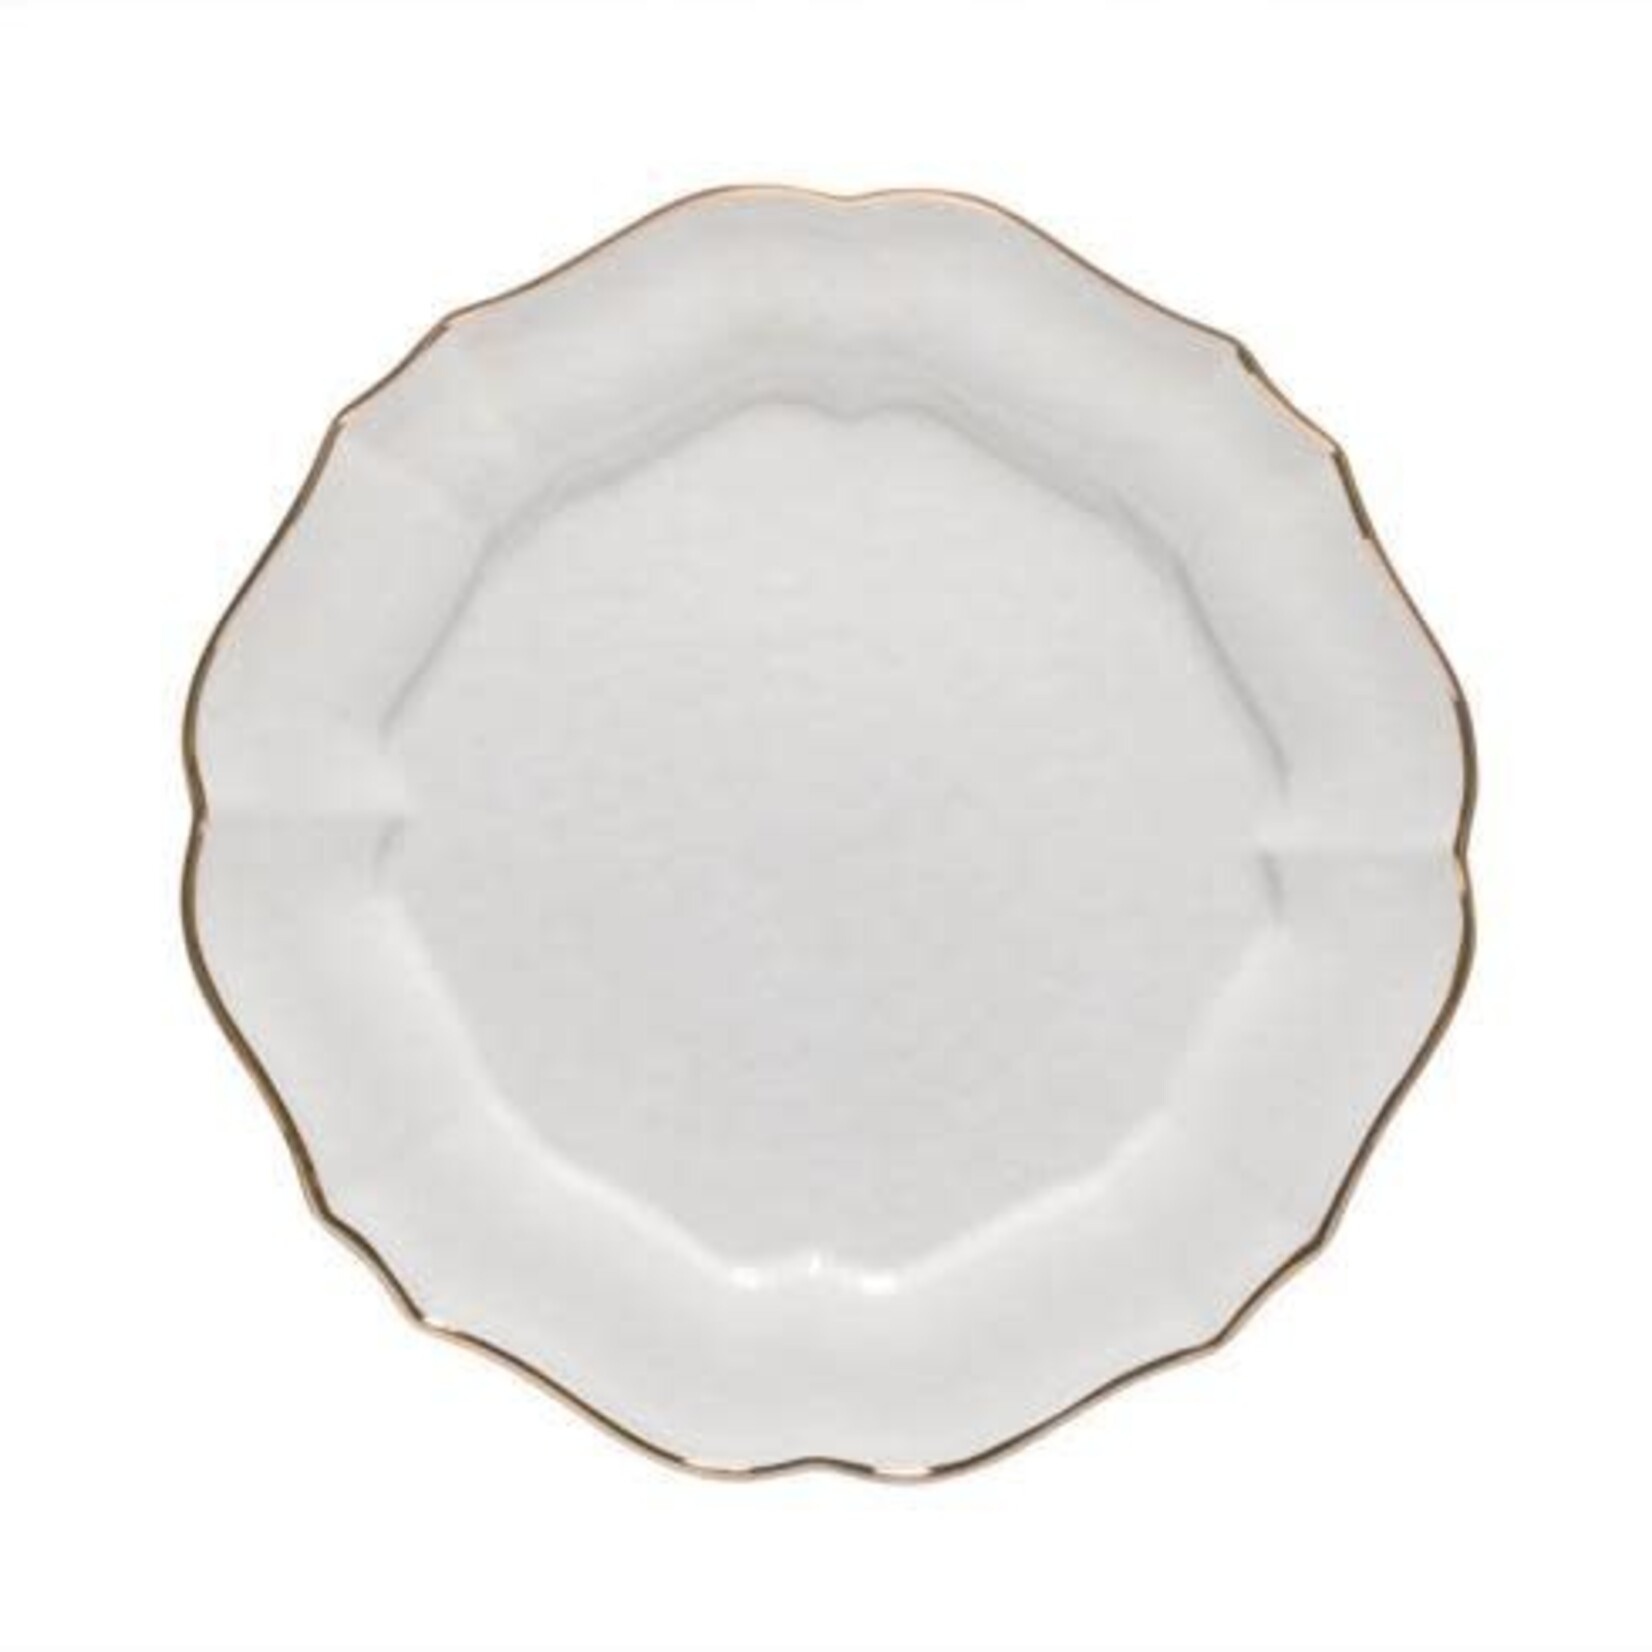 CASAFINA LIVING Impressions Dinner Plate, White w/ Gold Rim